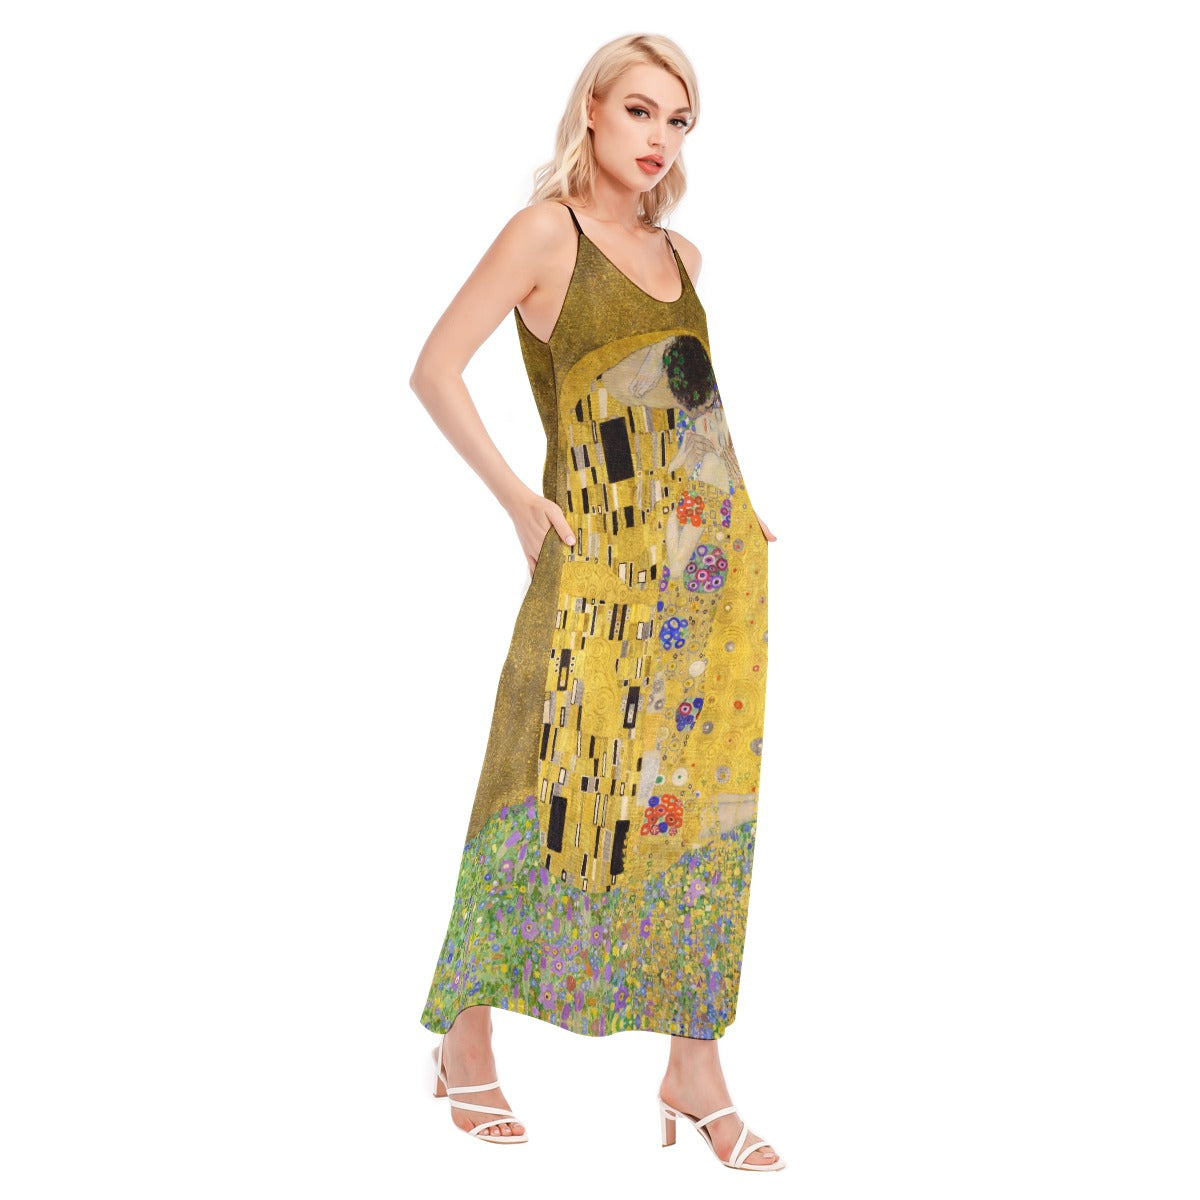 Gustav Klimt Inspired Fashion - Side View